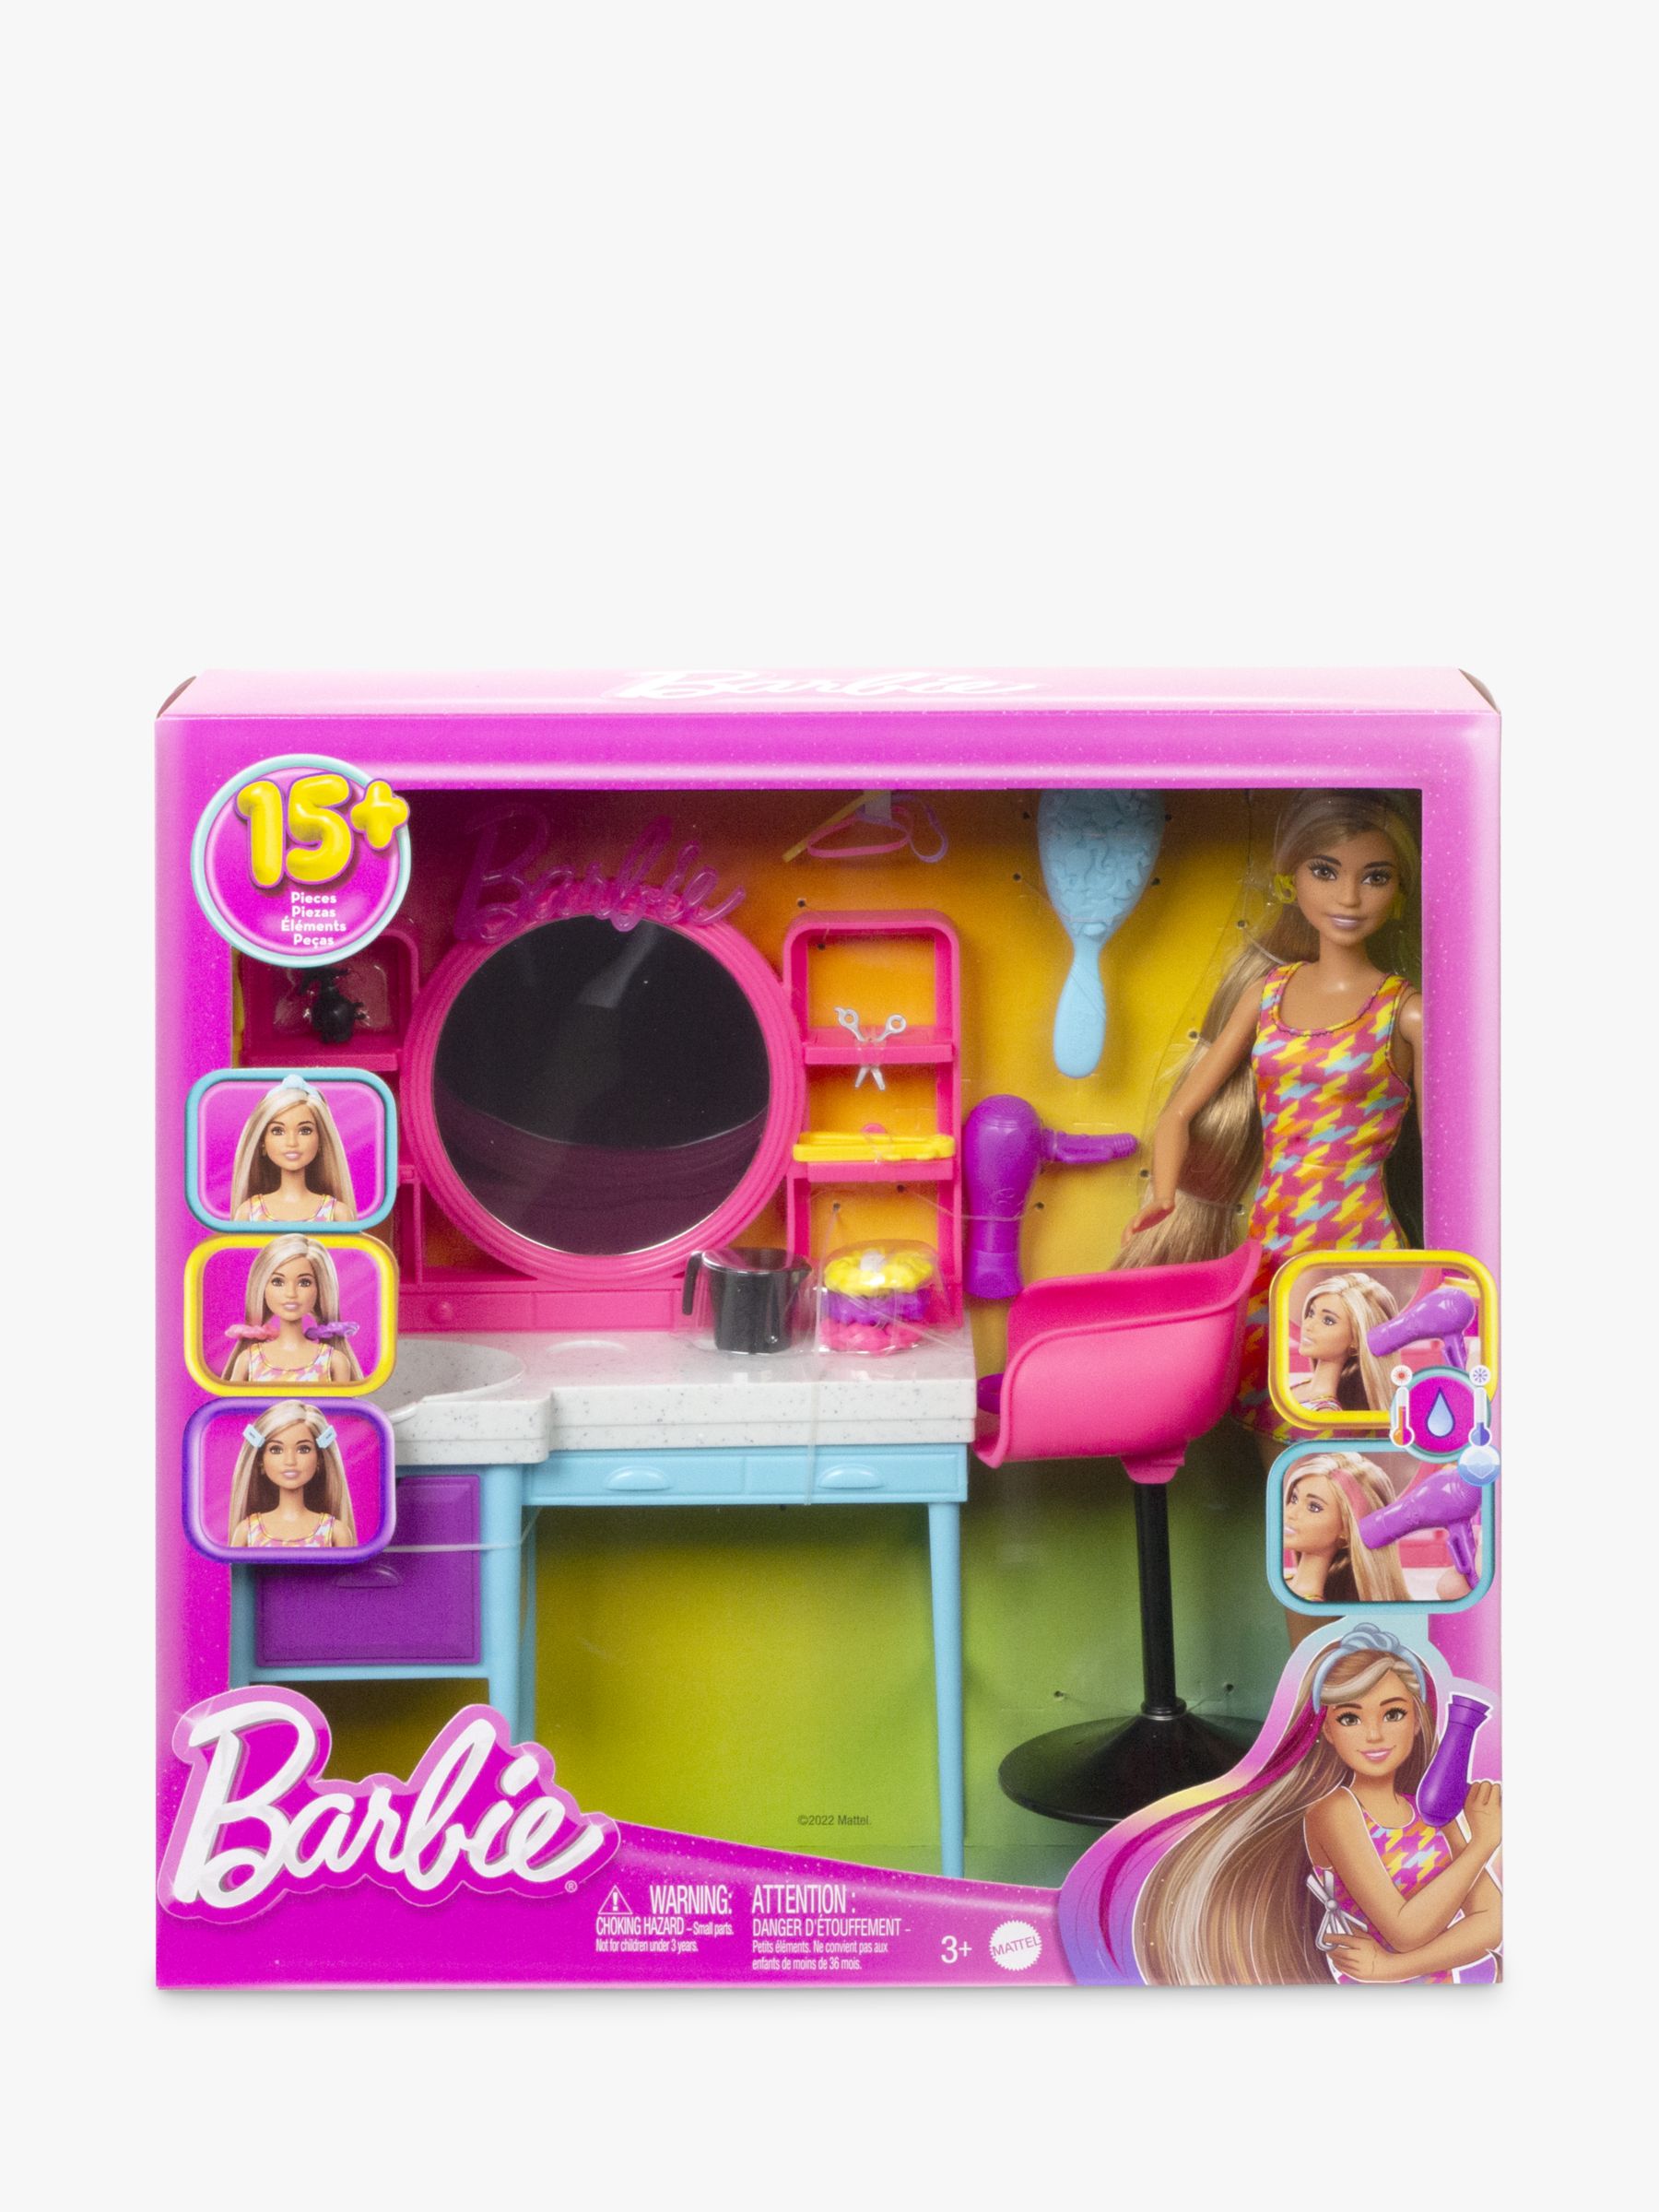 Arbitrage lommeregner Datum Barbie Doll and Colour-Change Hair Salon Playset